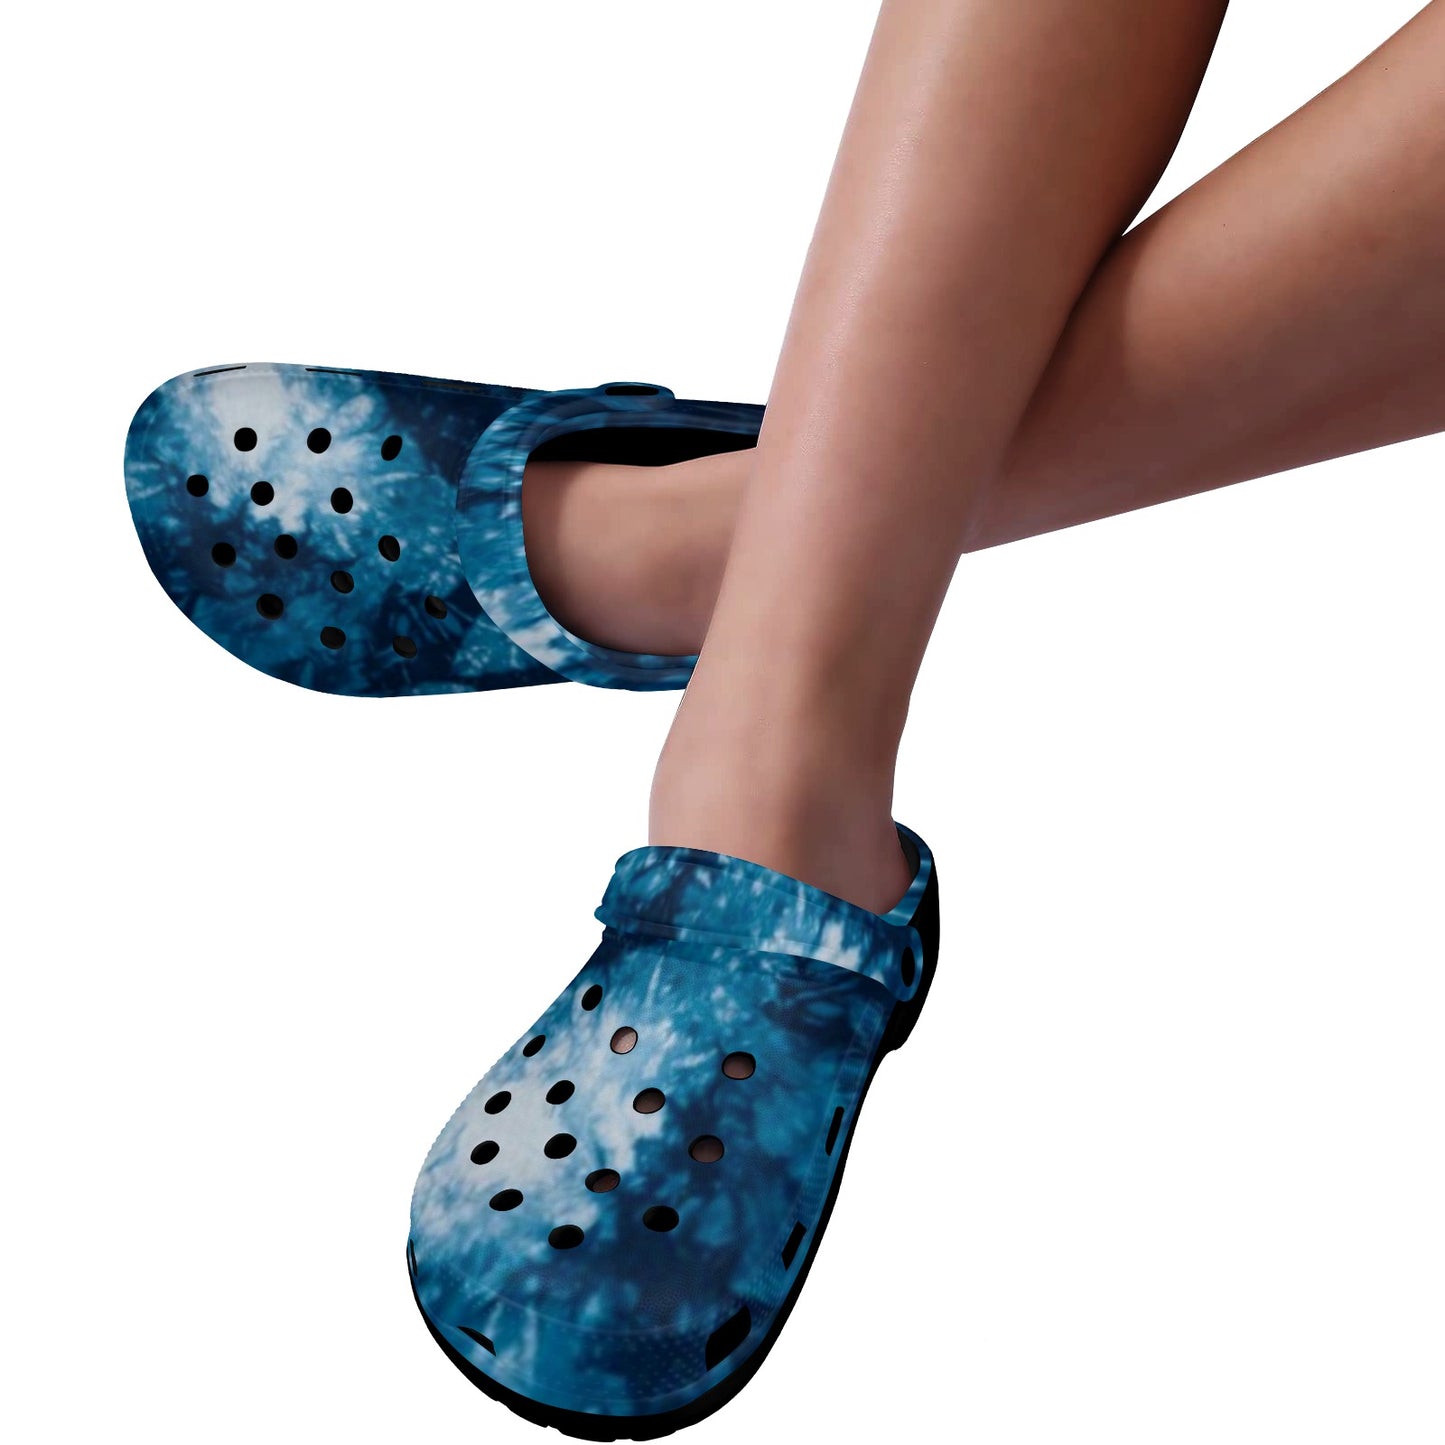 fz unisex sandals - abstract blue custom print adults clogs